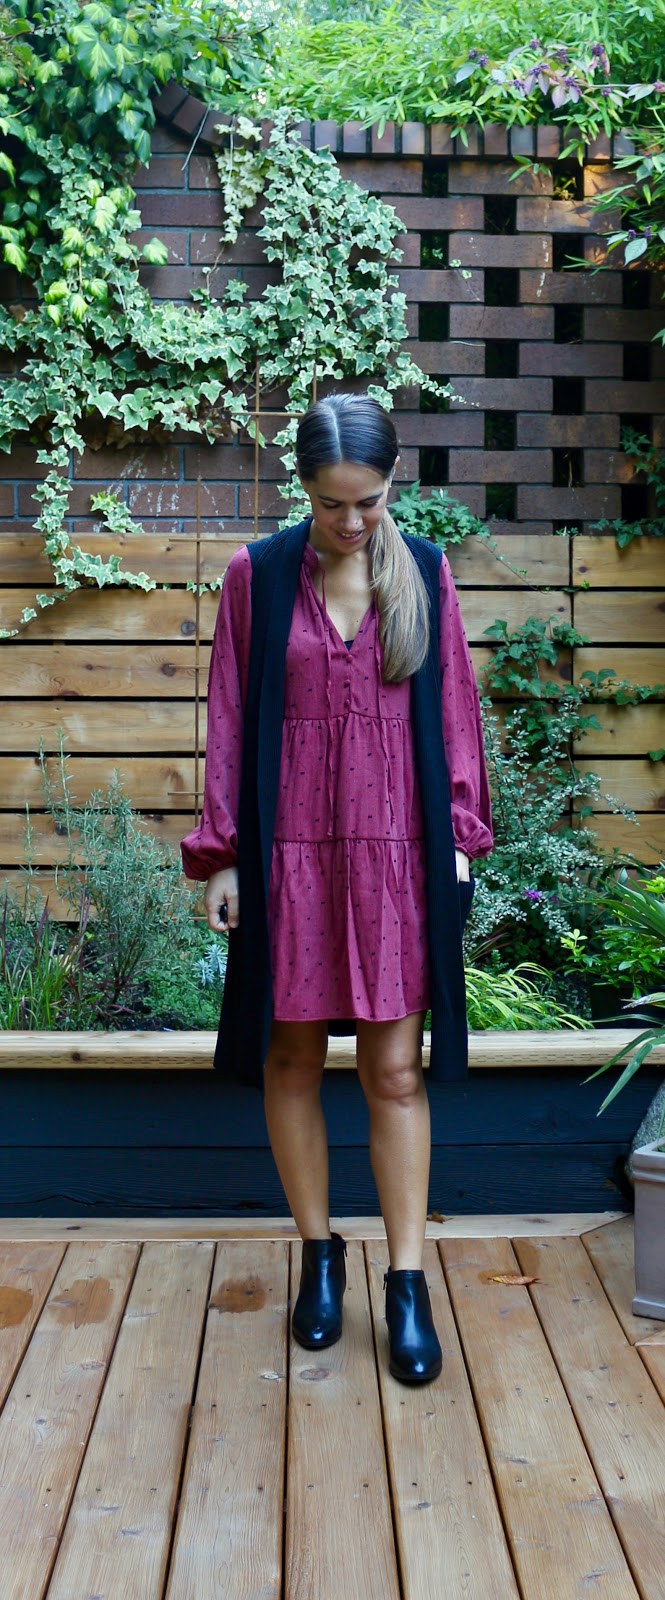 Jules in Flats - Zara Long Sleeve Dot Mini Dress (Business Casual Workwear on a Budget)